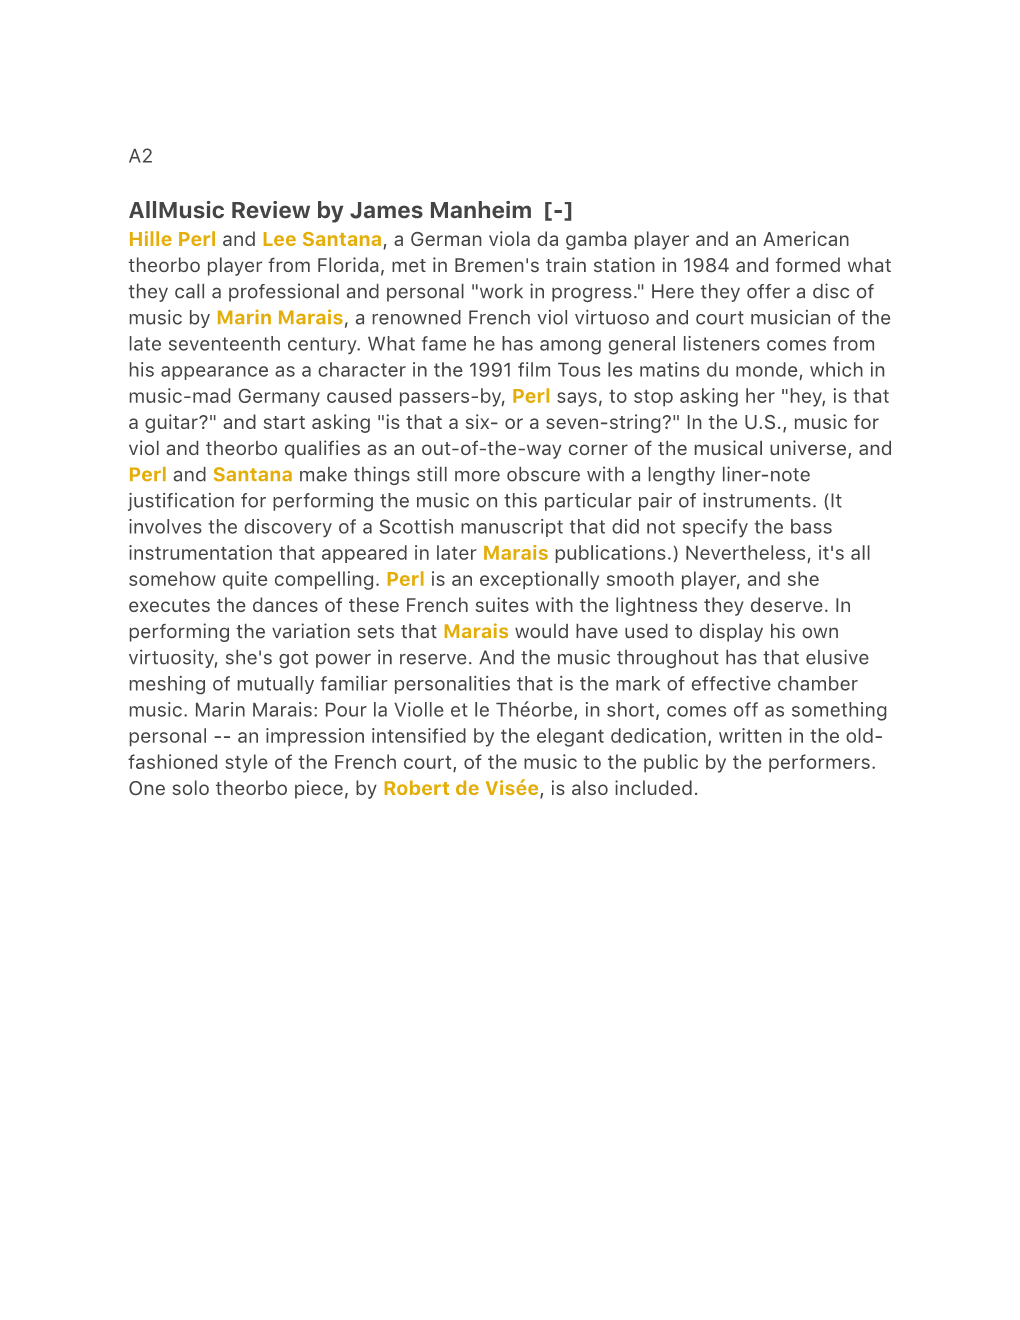 Allmusic Review by James Manheim